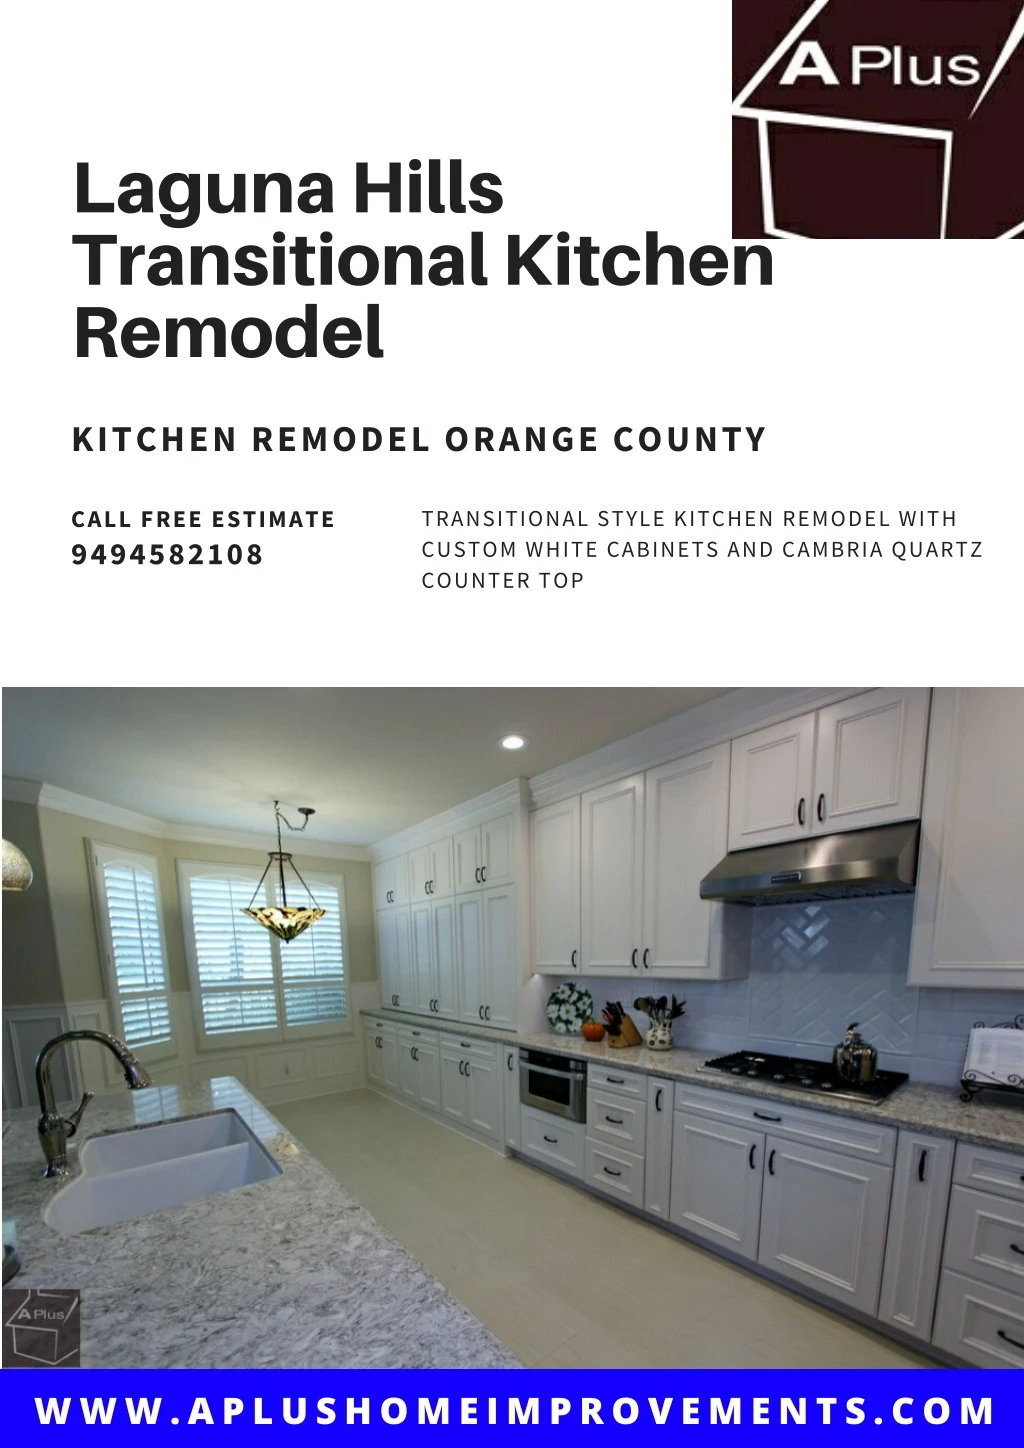 laguna hills transitional kitchen remodel